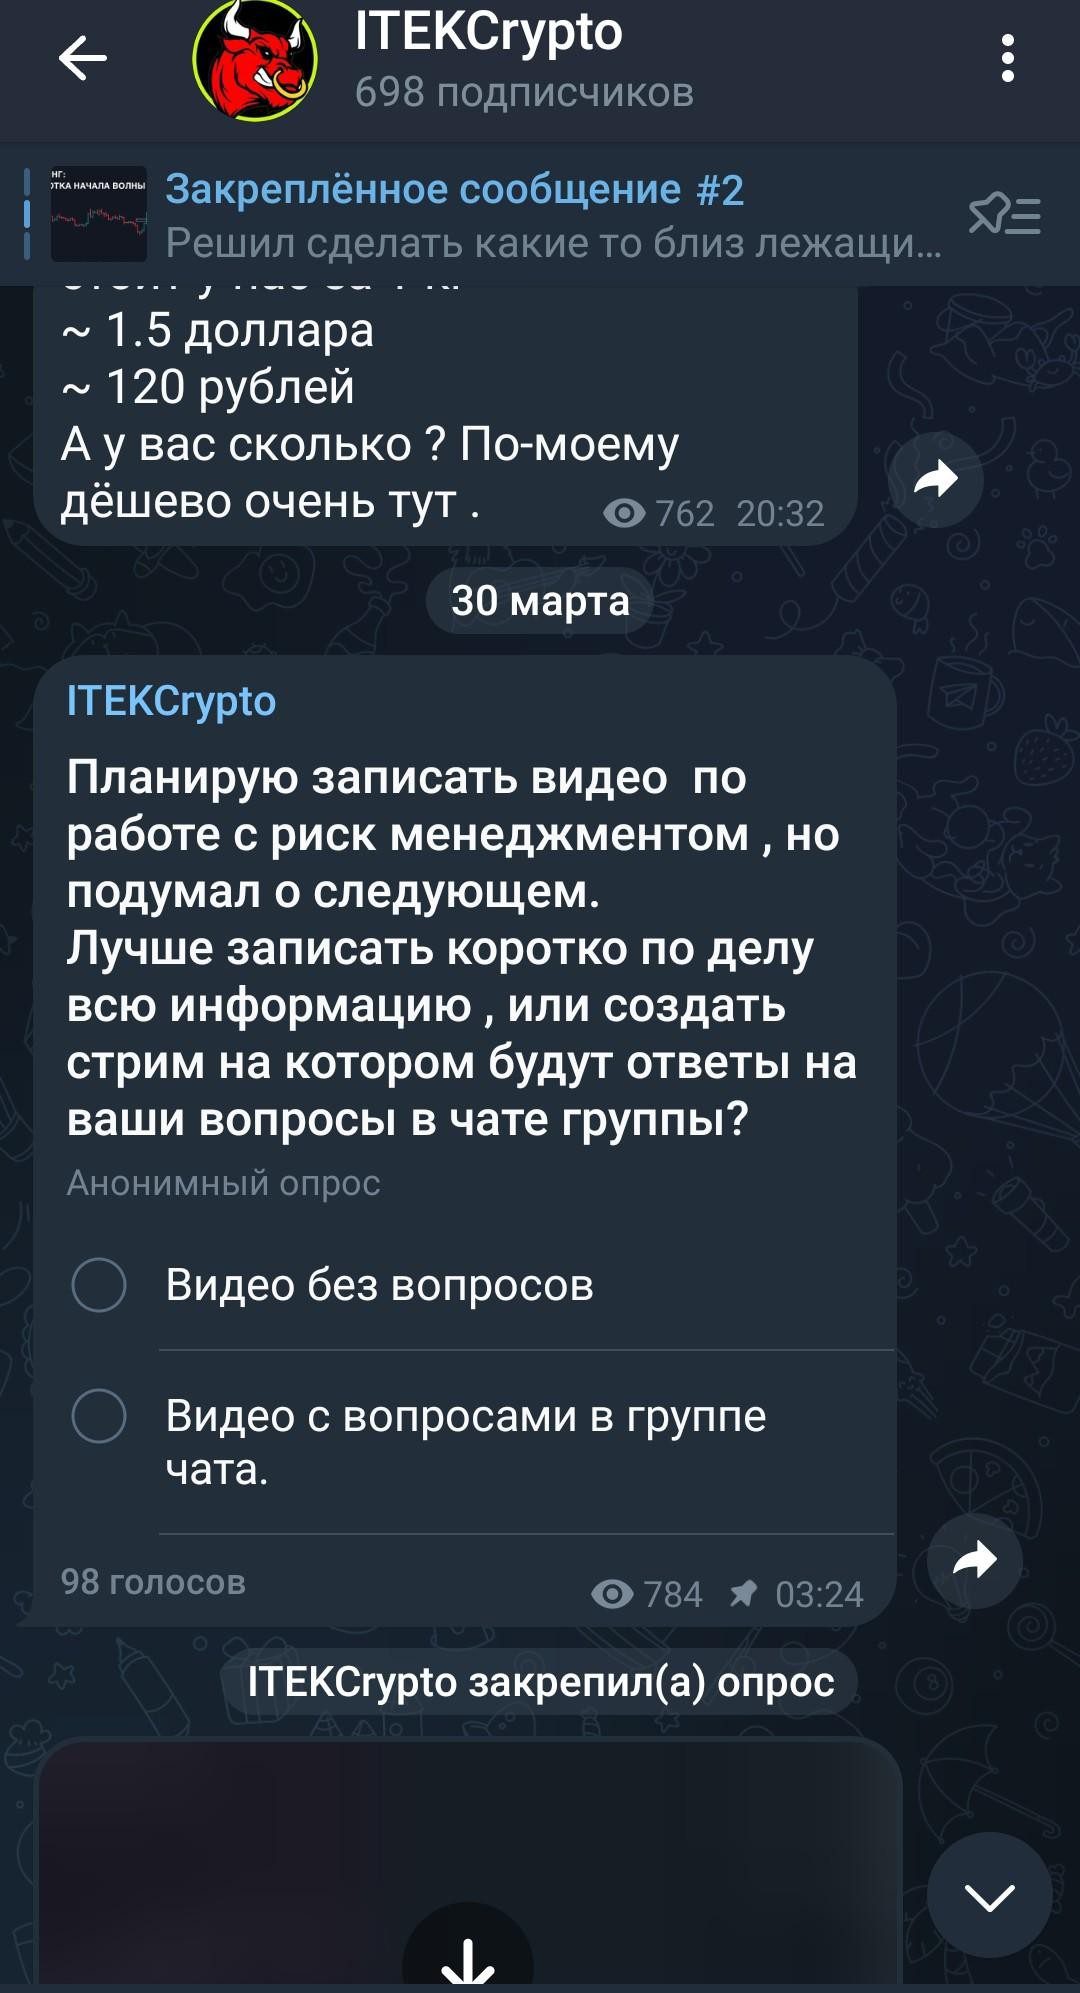 itek crypto телеграмм обзор